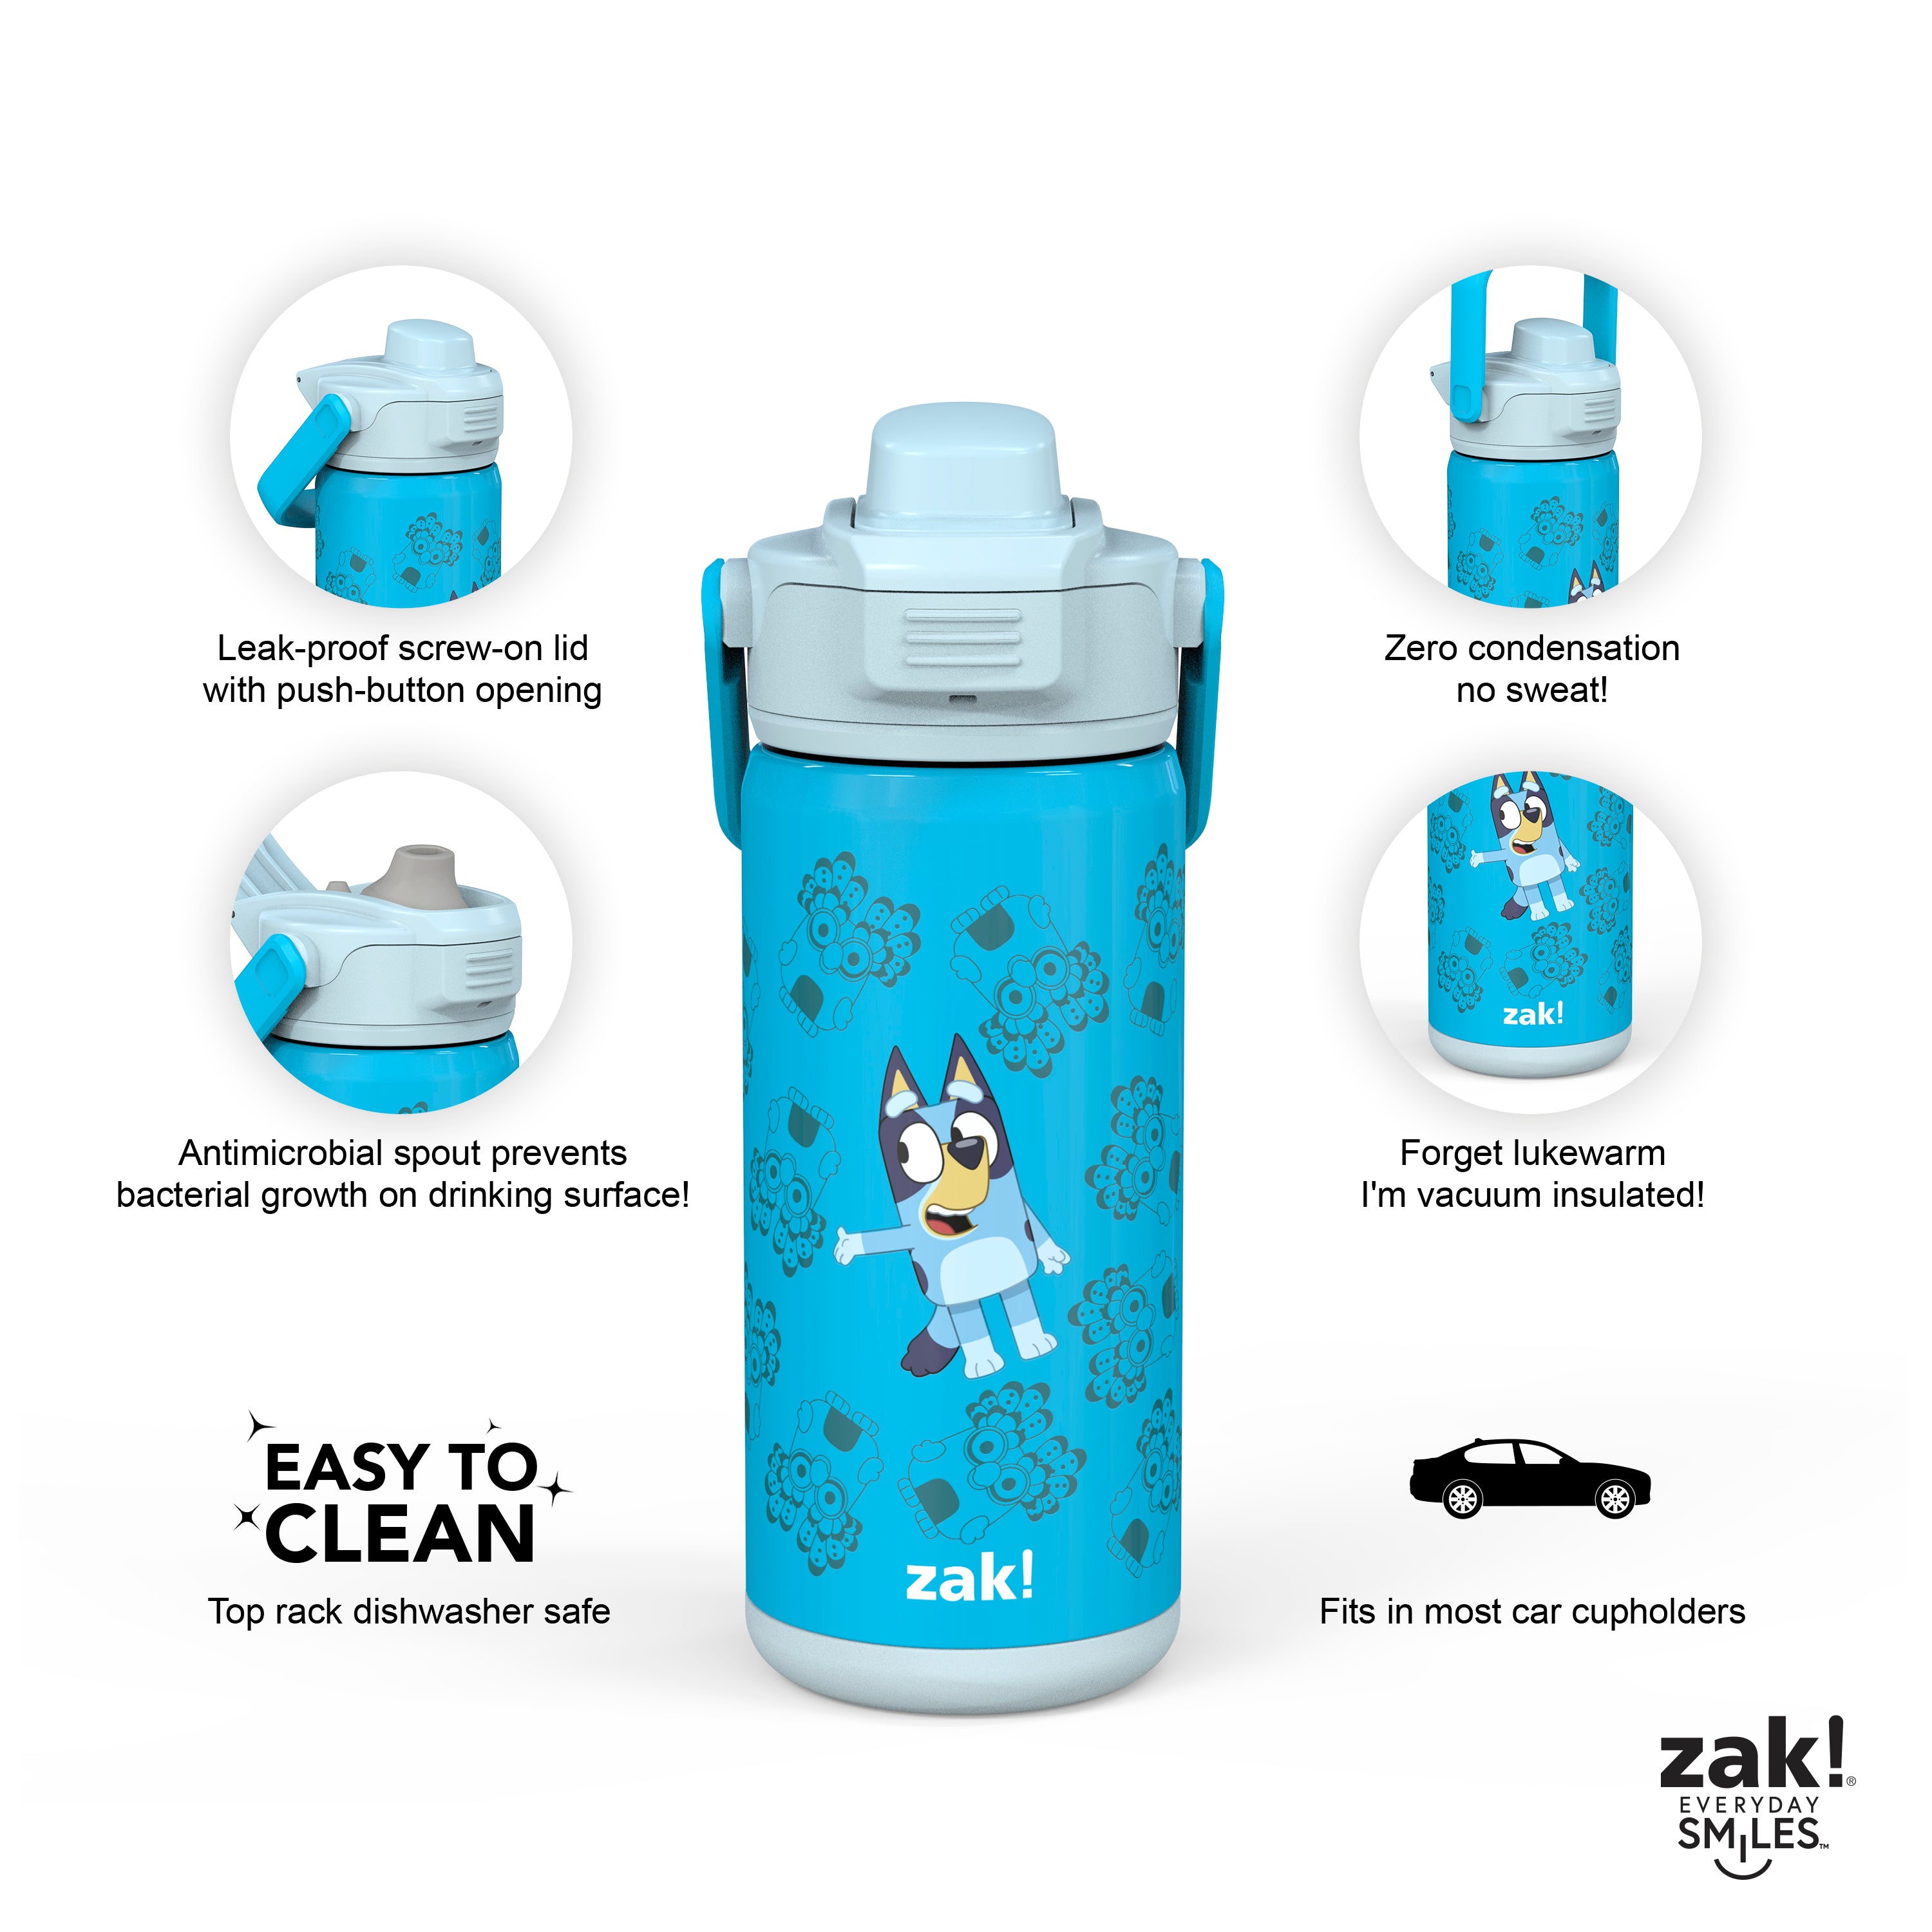 Buy Zak Bluey Squeeze Bottle Online, Worldwide Delivery